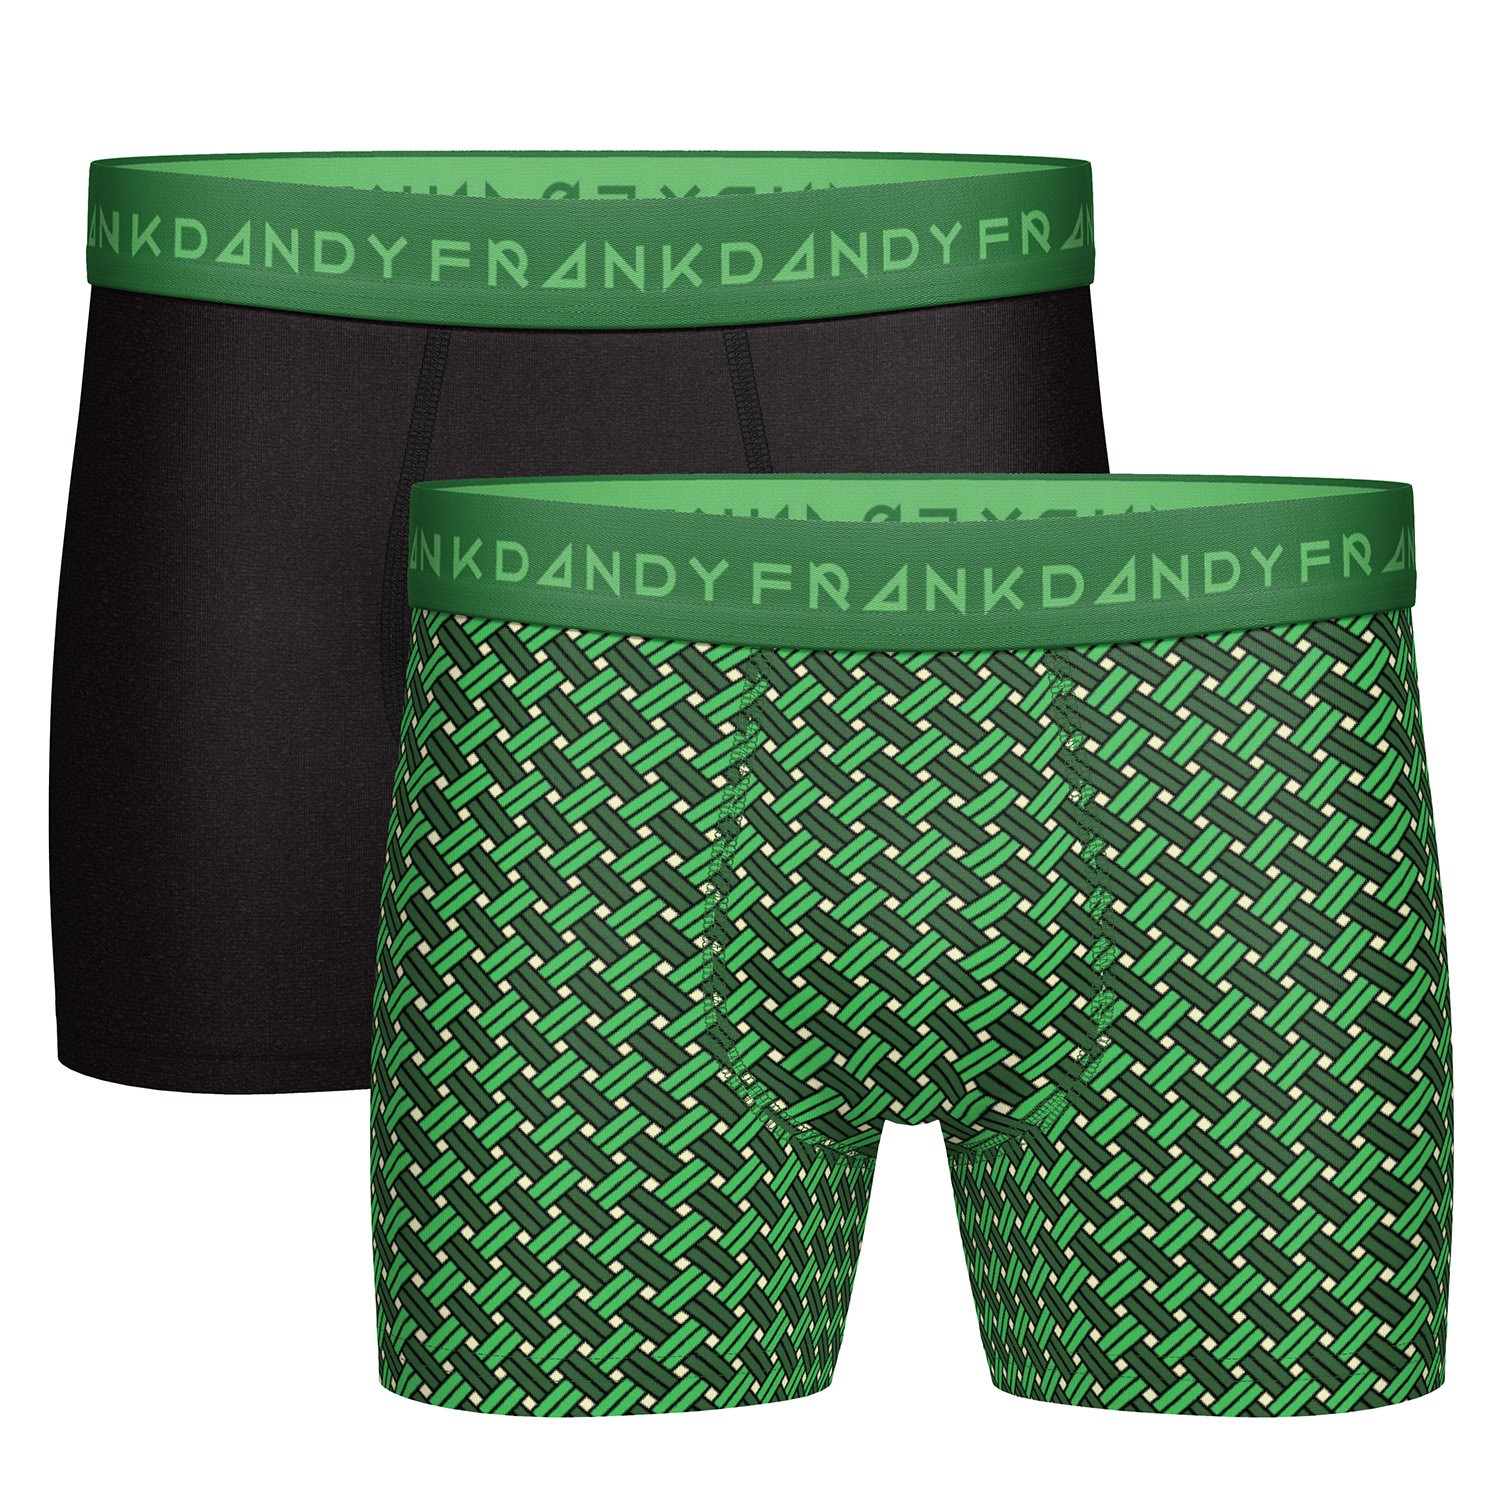 Frank Dandy Ranyo Boxer